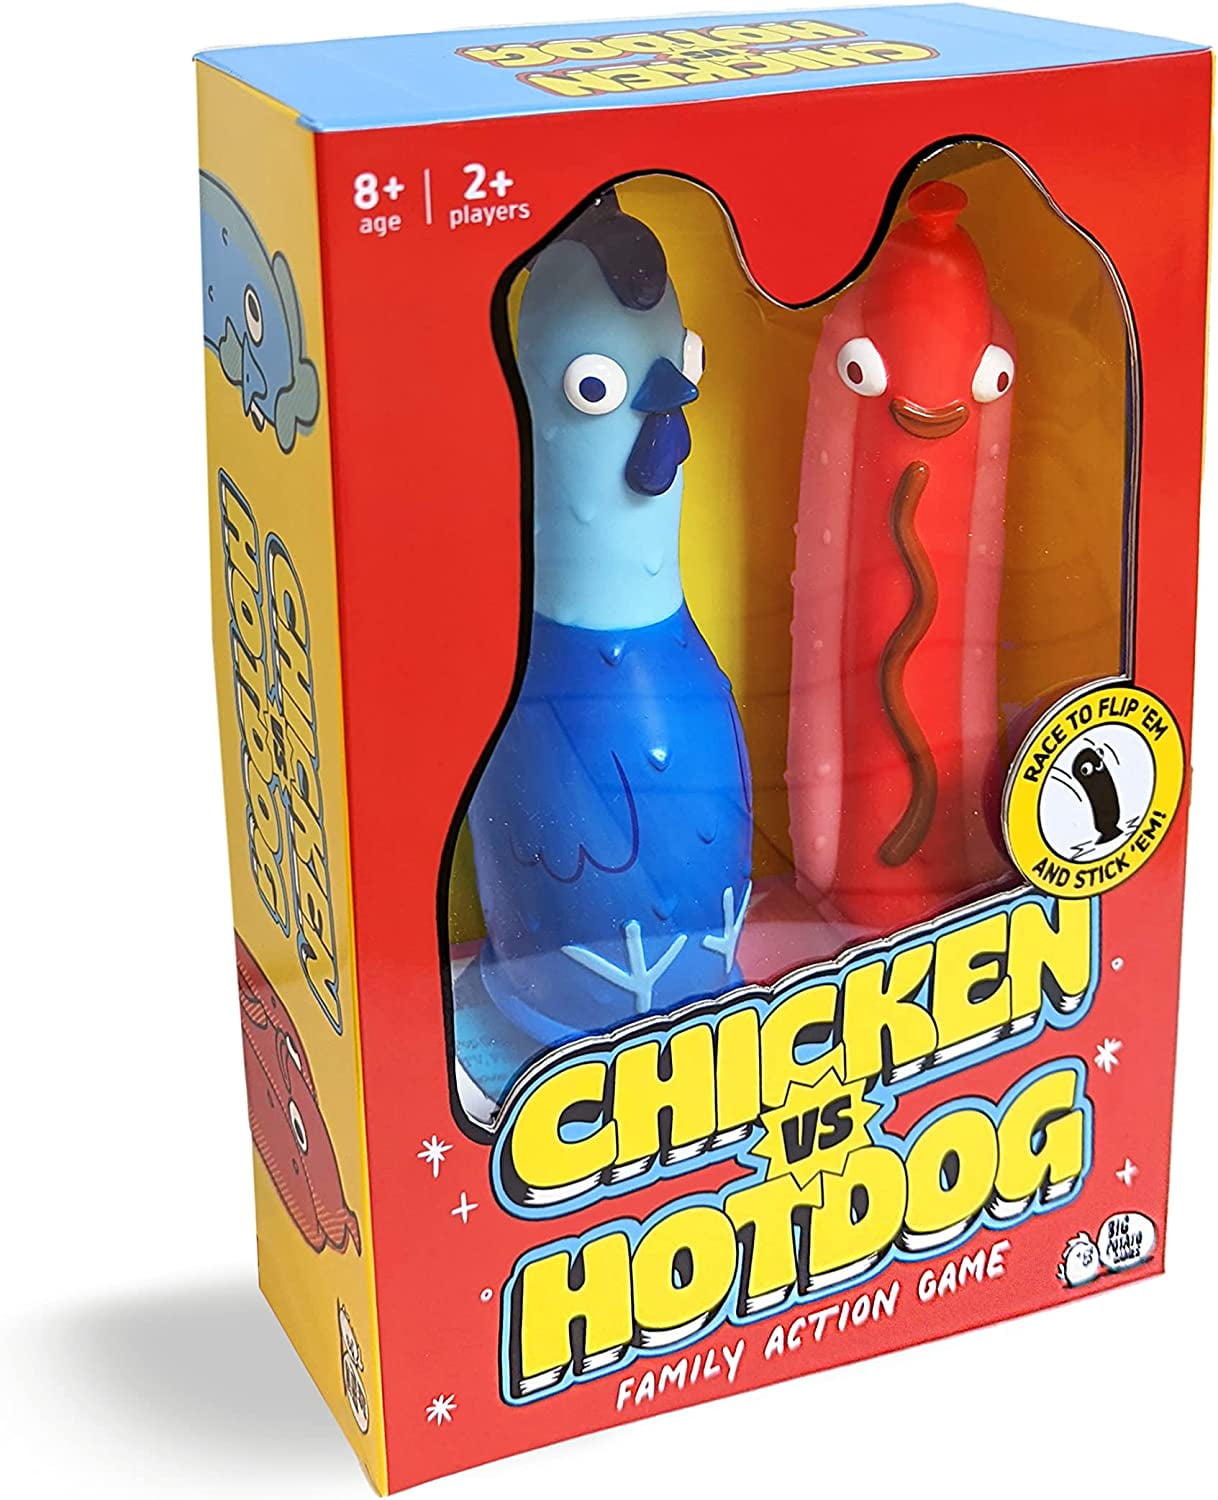 Big Potato Chicken vs. Hot Dog Card Game